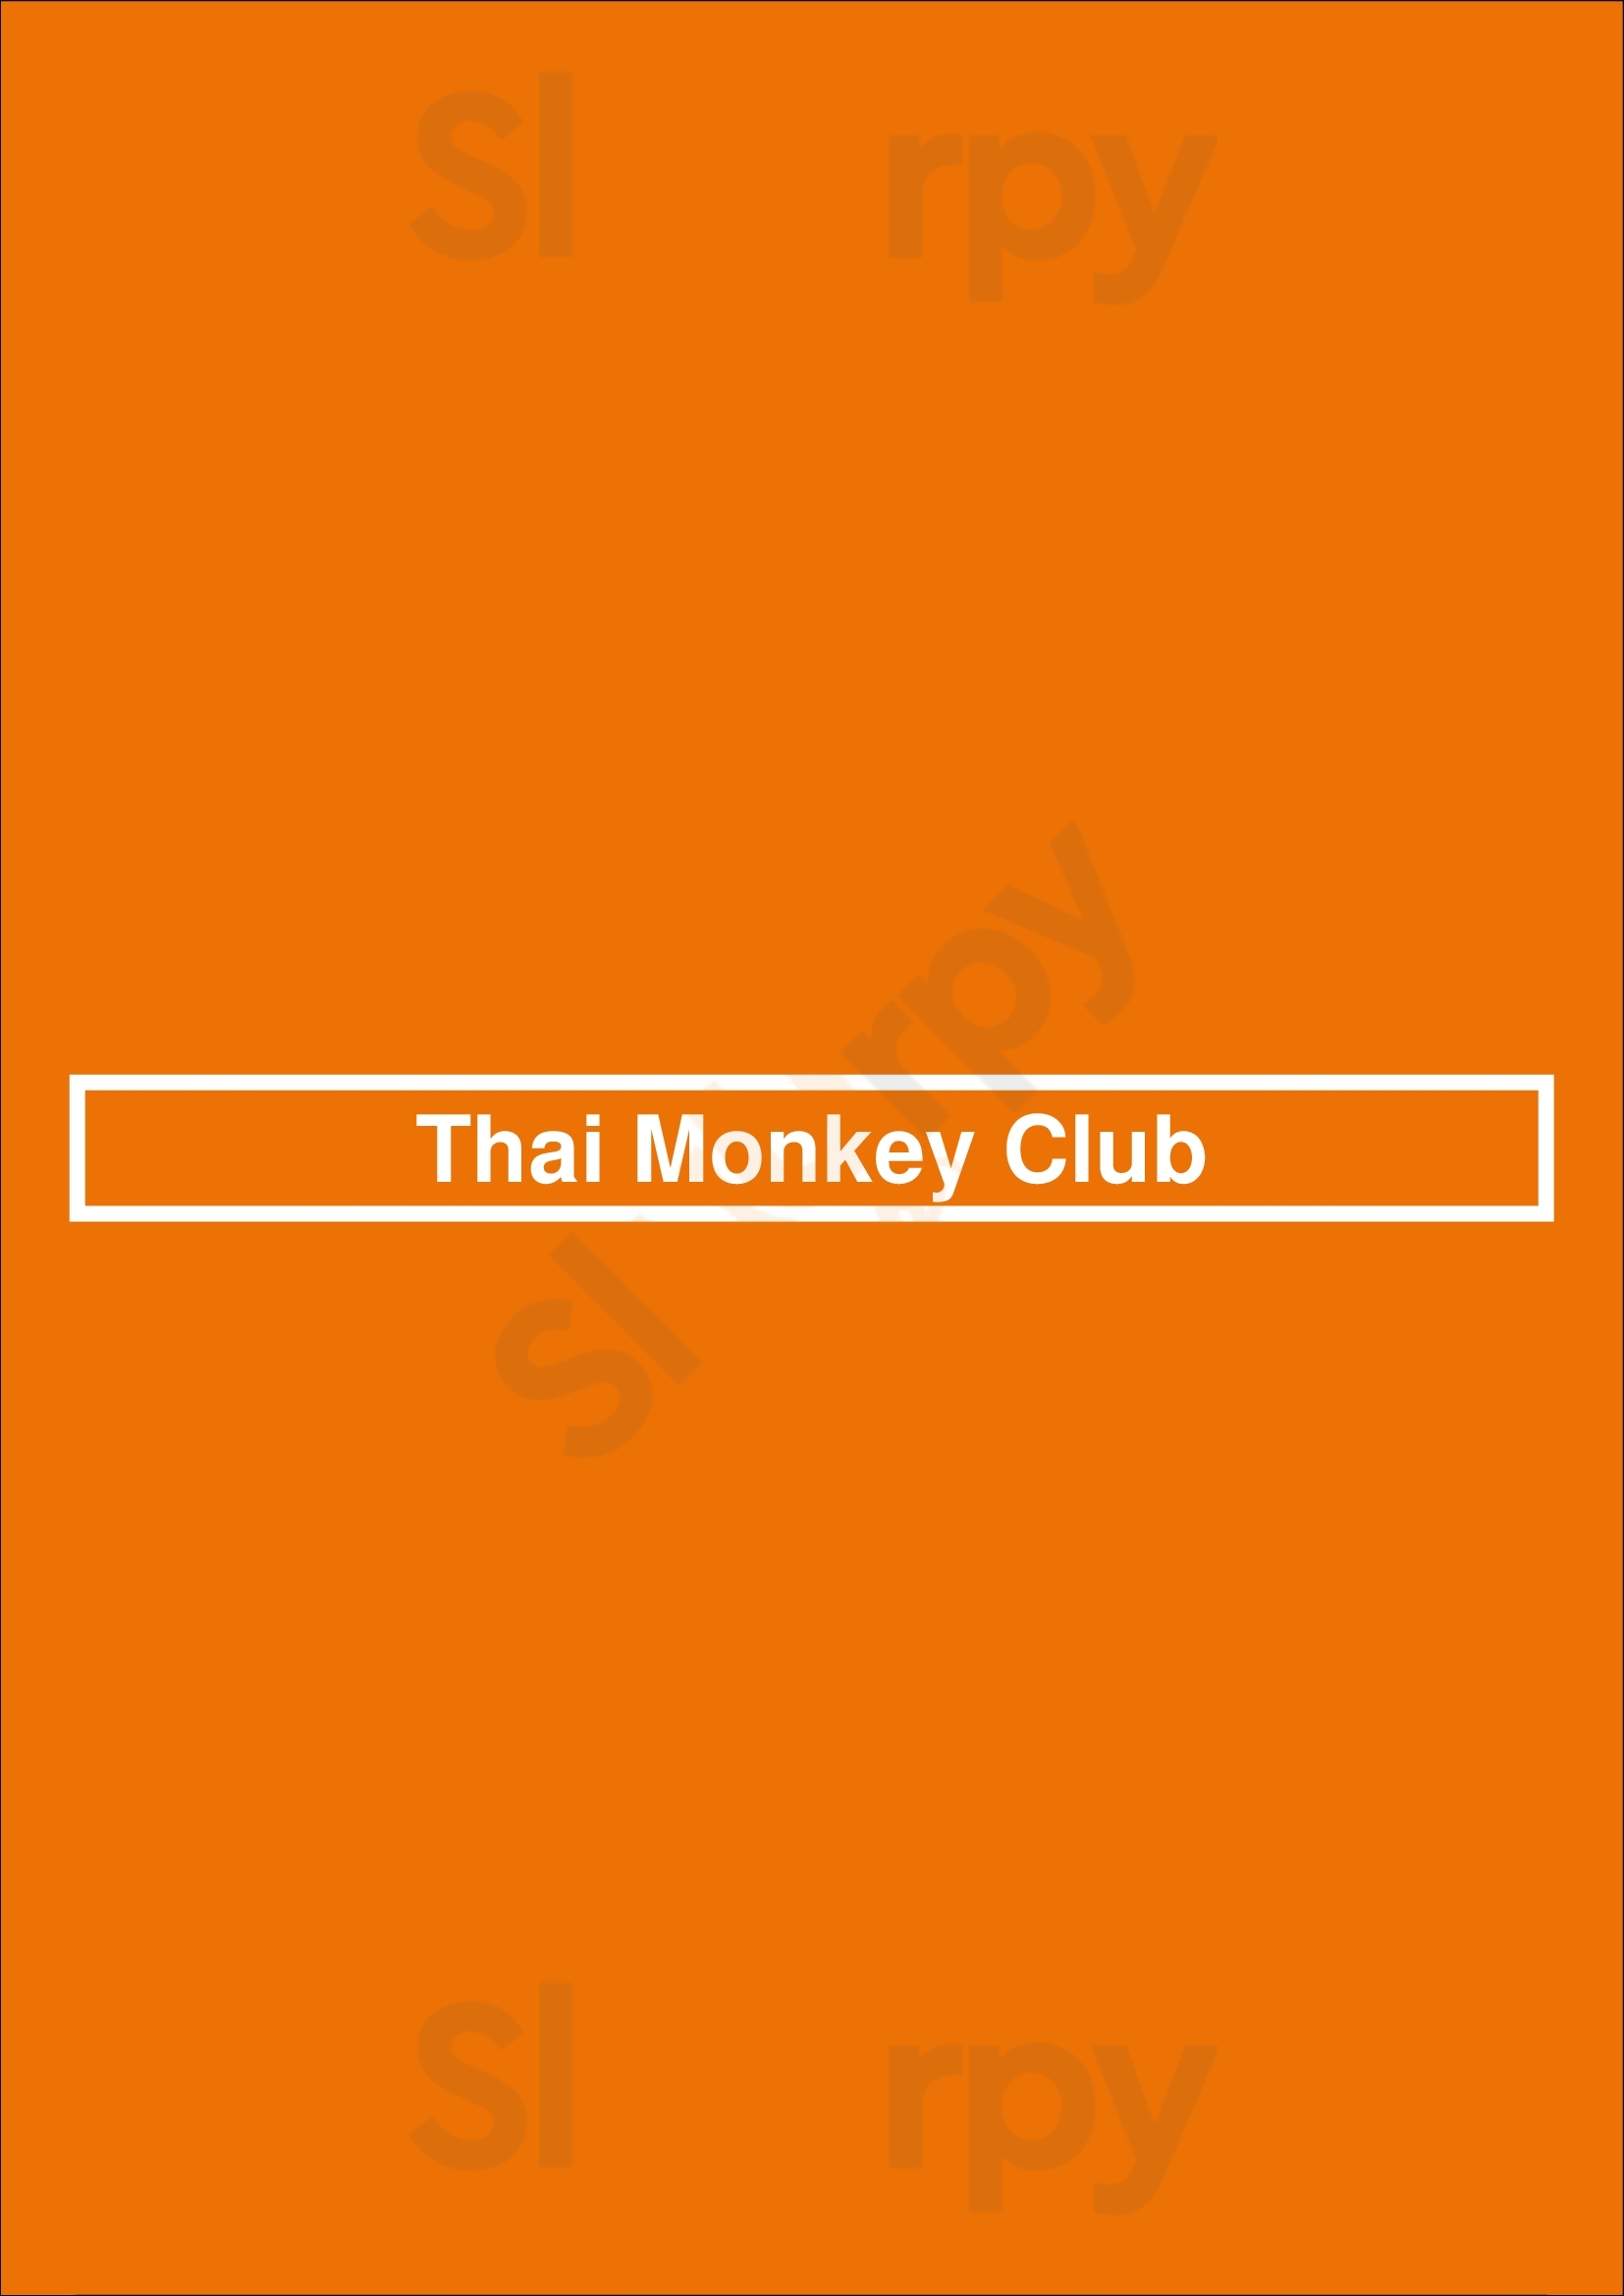 Thai Monkey Club Denver Menu - 1